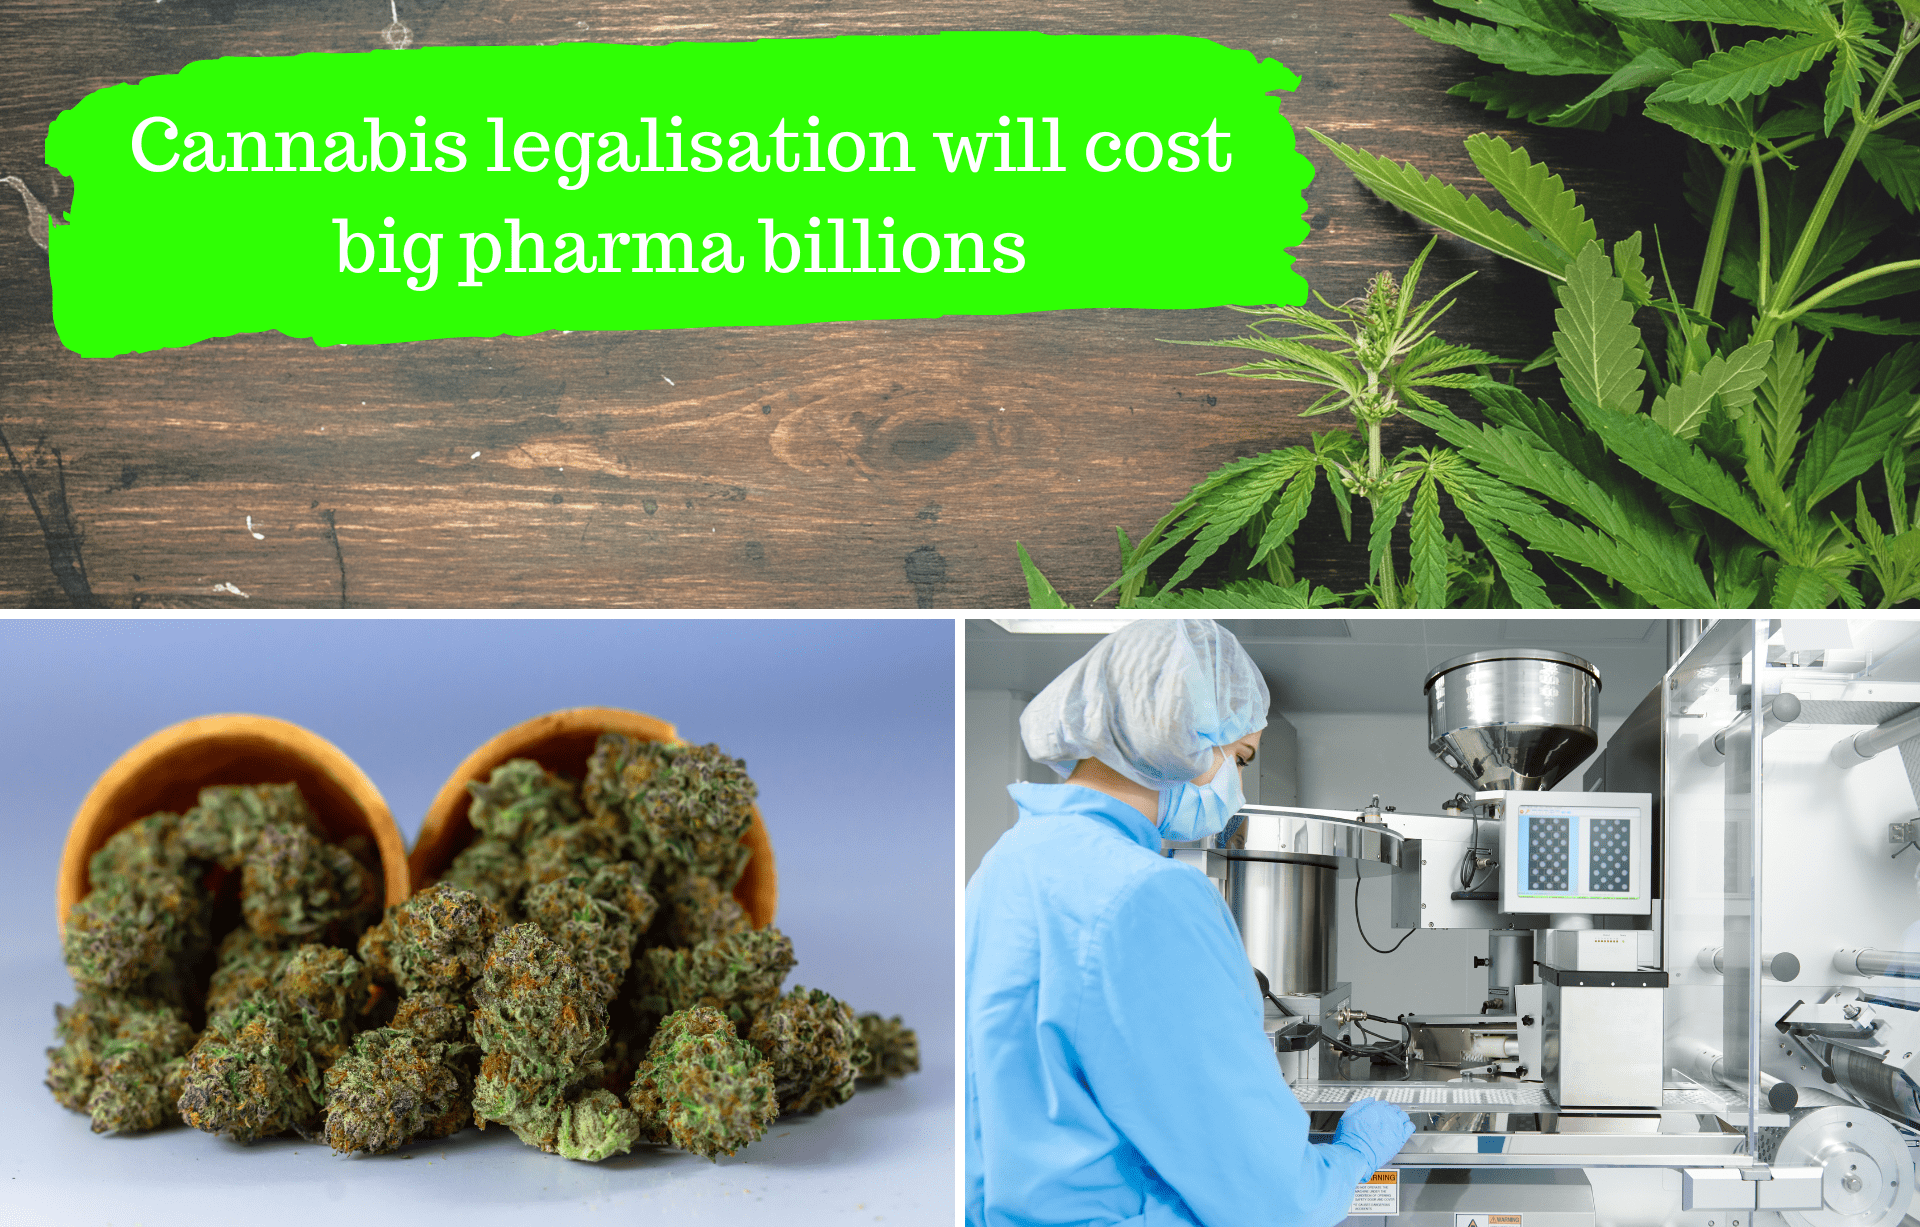 Cannabis legalization will cost big pharma billions